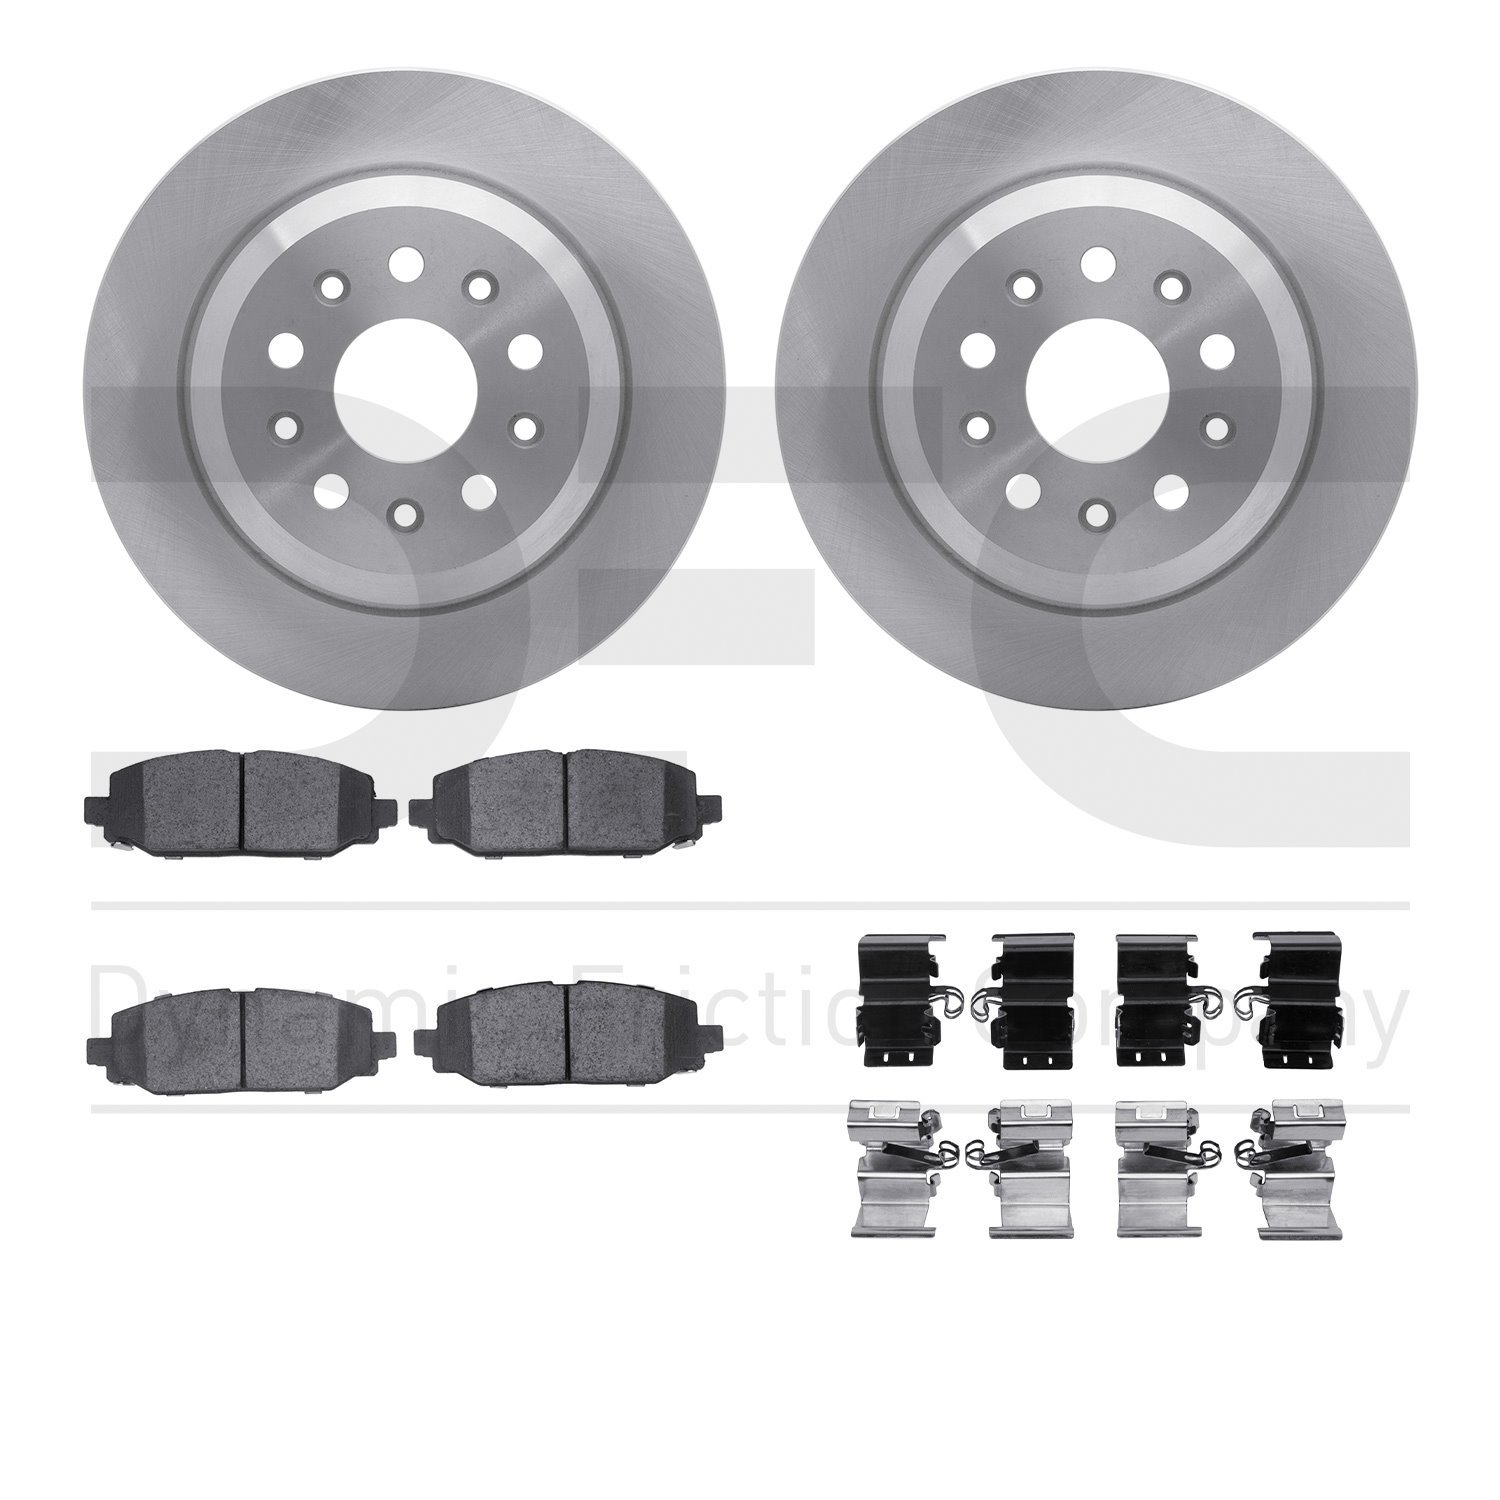 6412-42139 Brake Rotors with Ultimate-Duty Brake Pads Kit & Hardware, Fits Select Mopar, Position: Rear